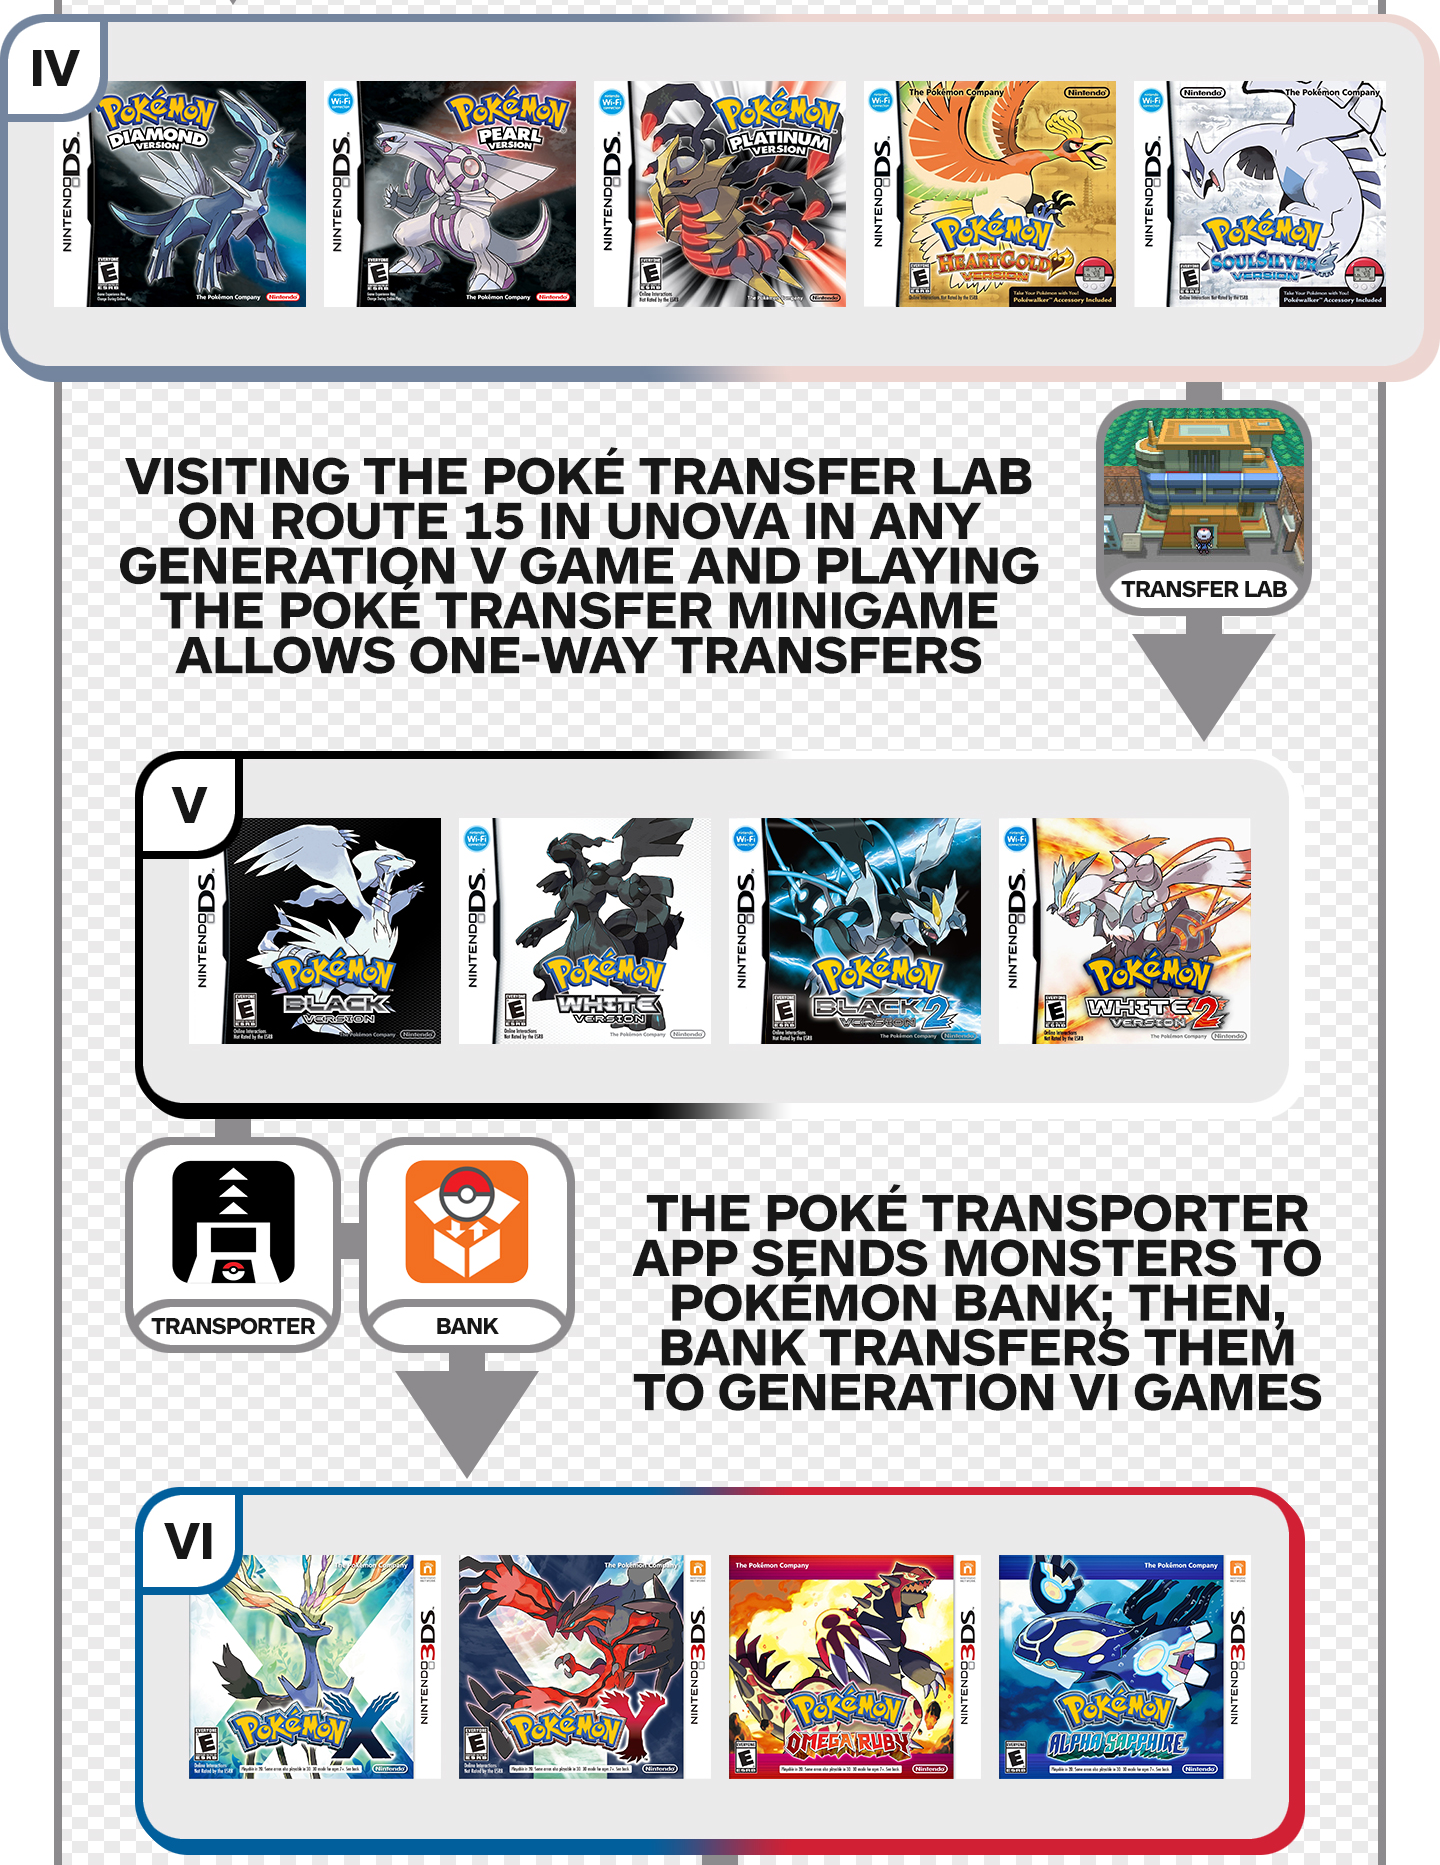 Lugia - Pokemon Diamond, Pearl and Platinum Guide - IGN